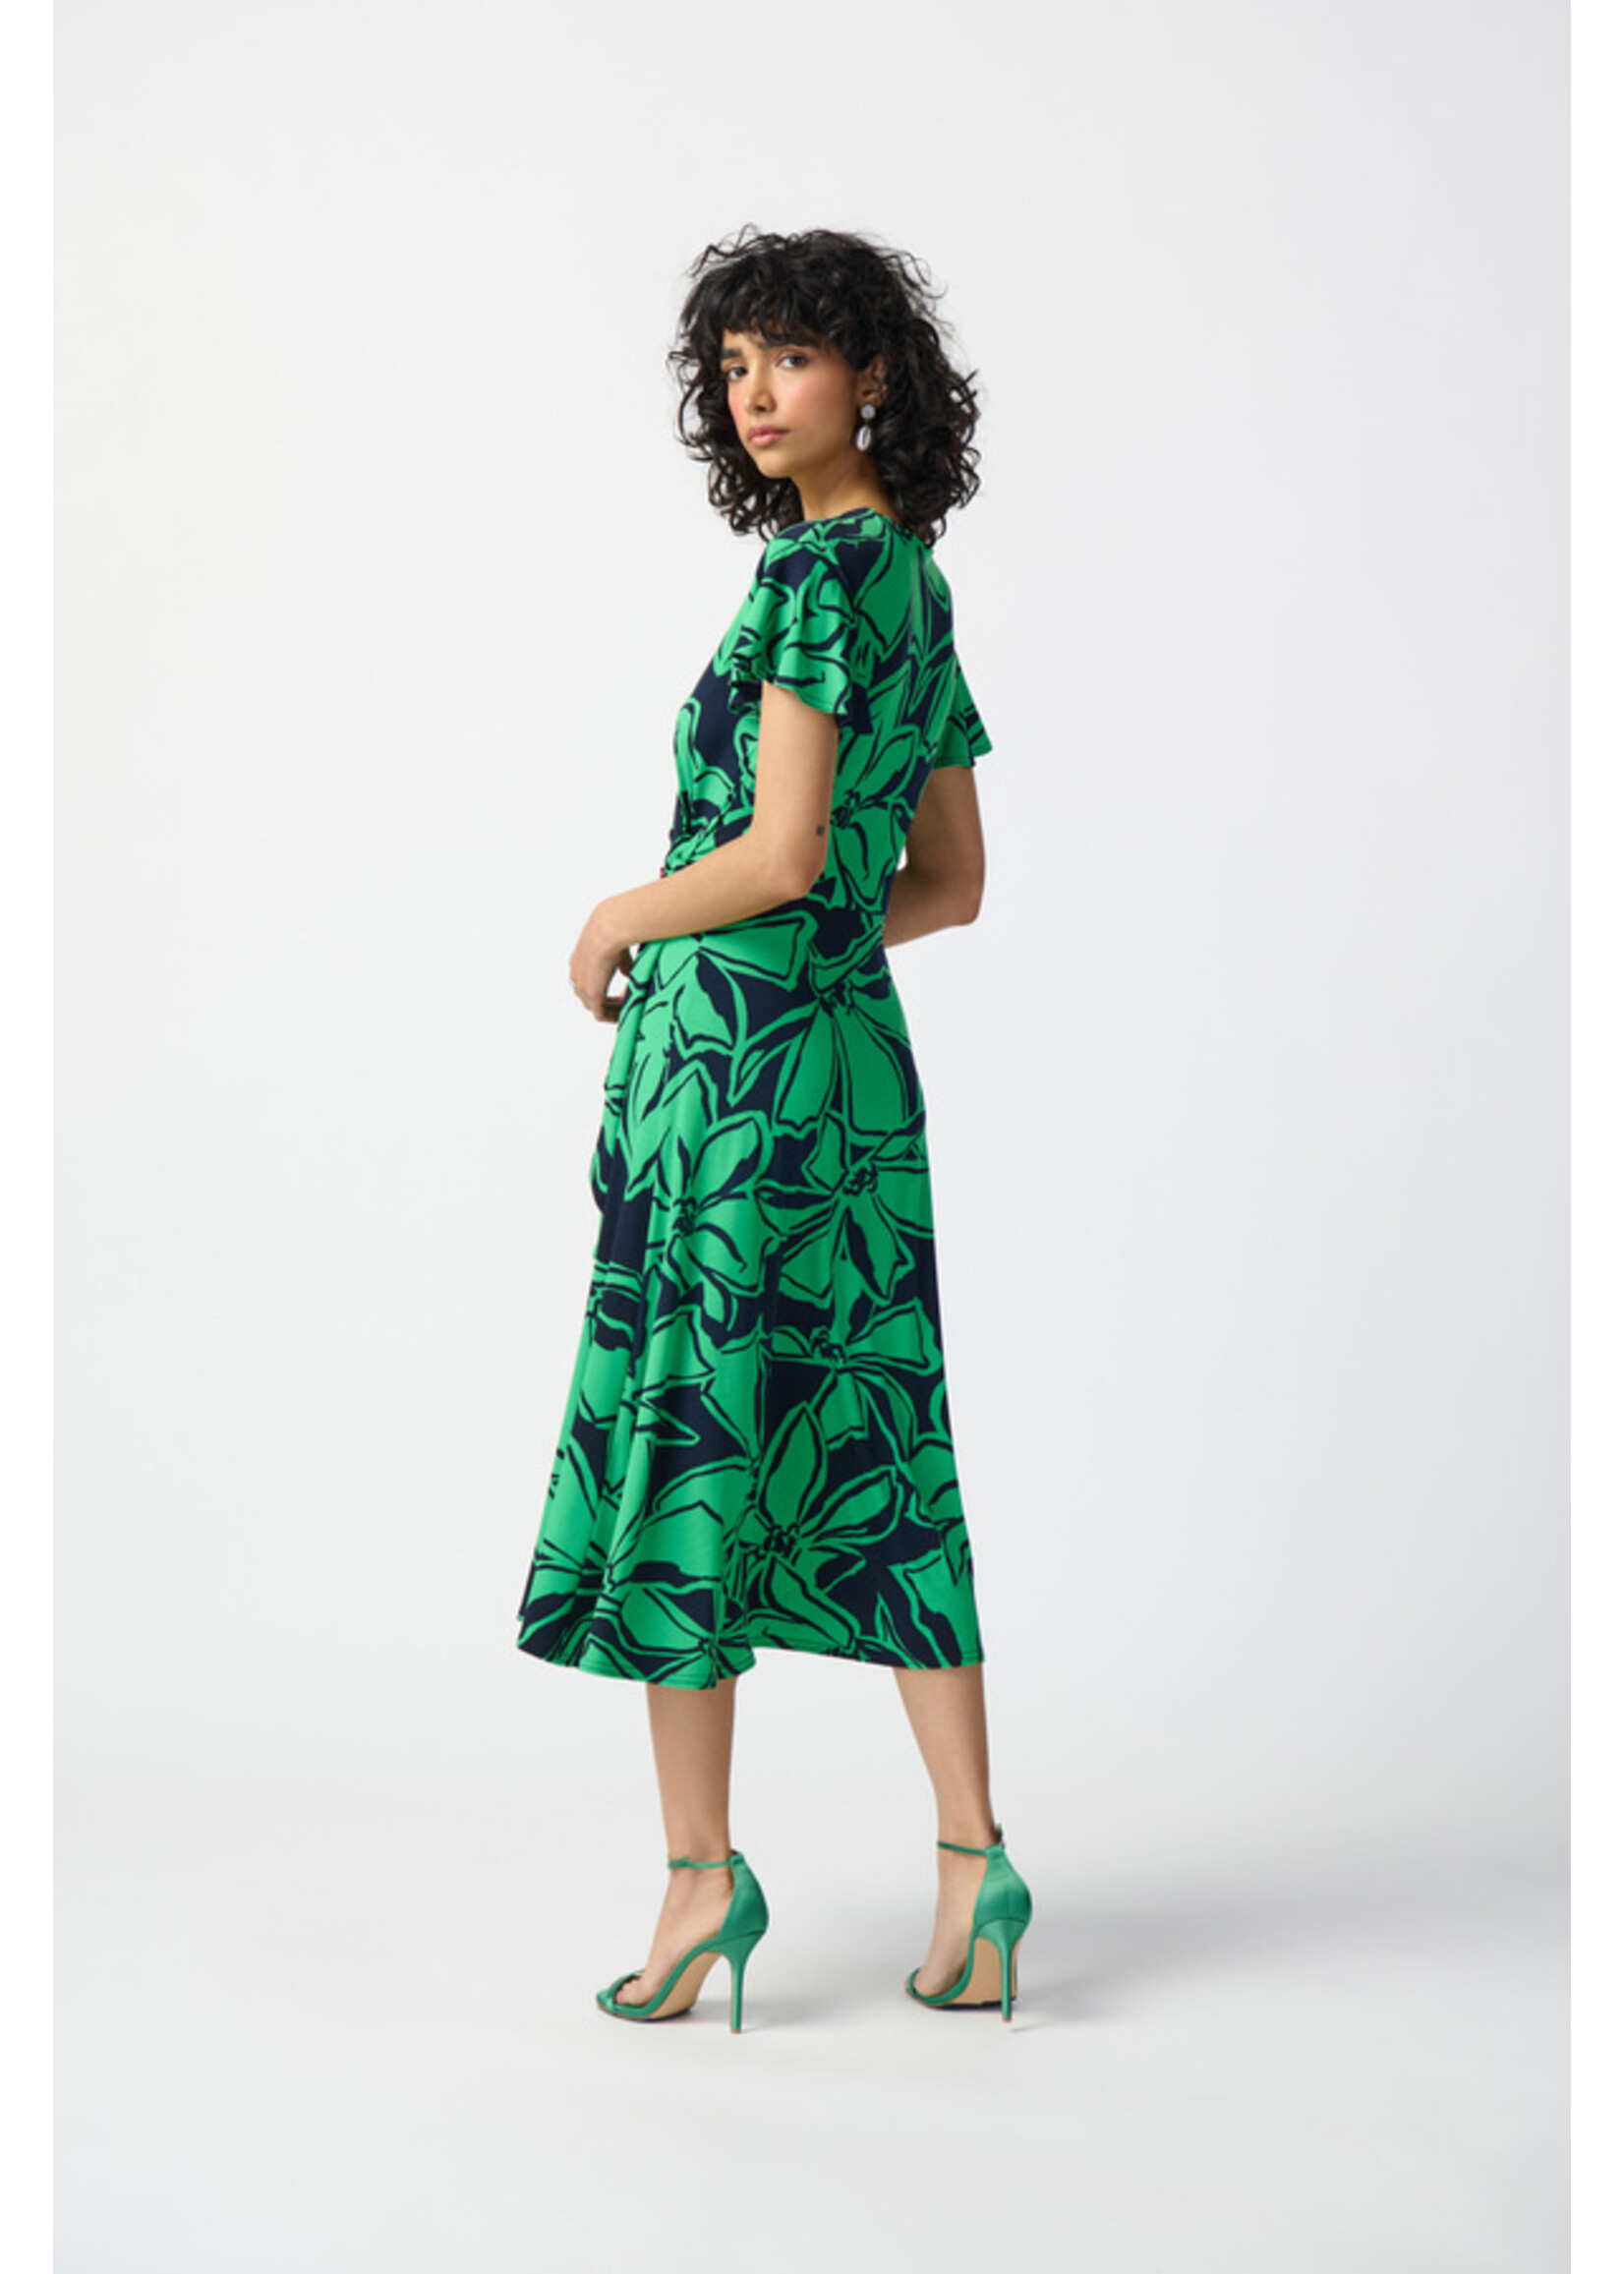 Joseph Ribkoff Floral Print Midi Dress Style 241052